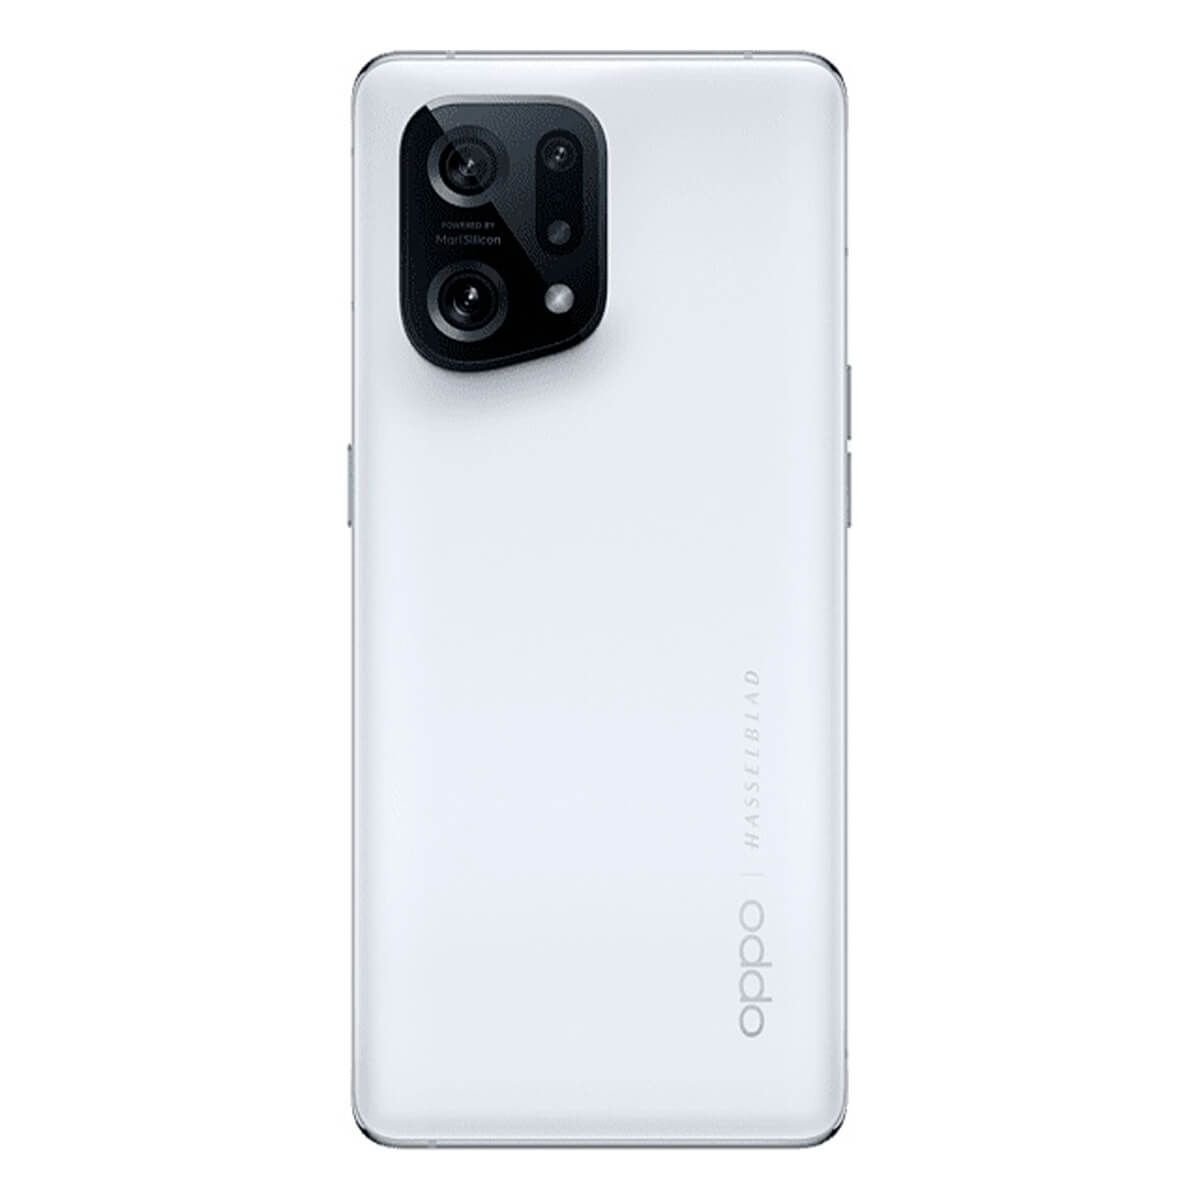 Oppo Find X5 5G 8GB/256GB White (Ceramic White) Dual SIM CPH2307